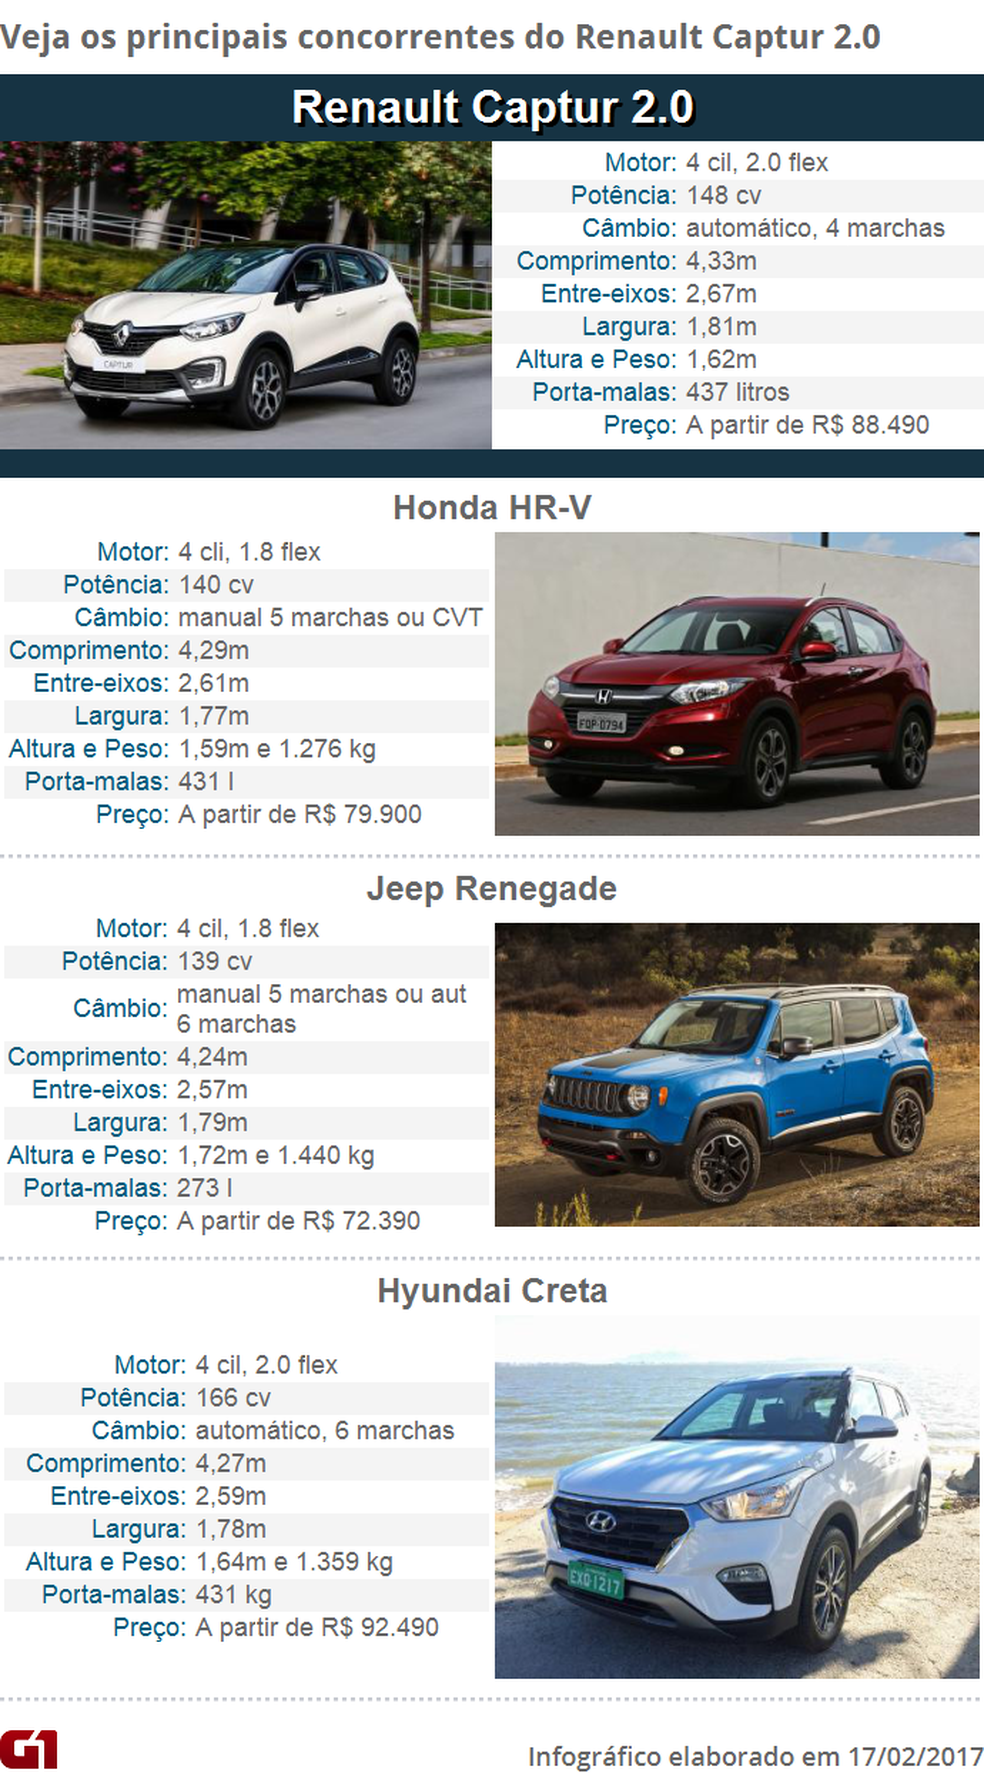  Veja os destaques do Renault Captur 2.0 (Foto:   G1)